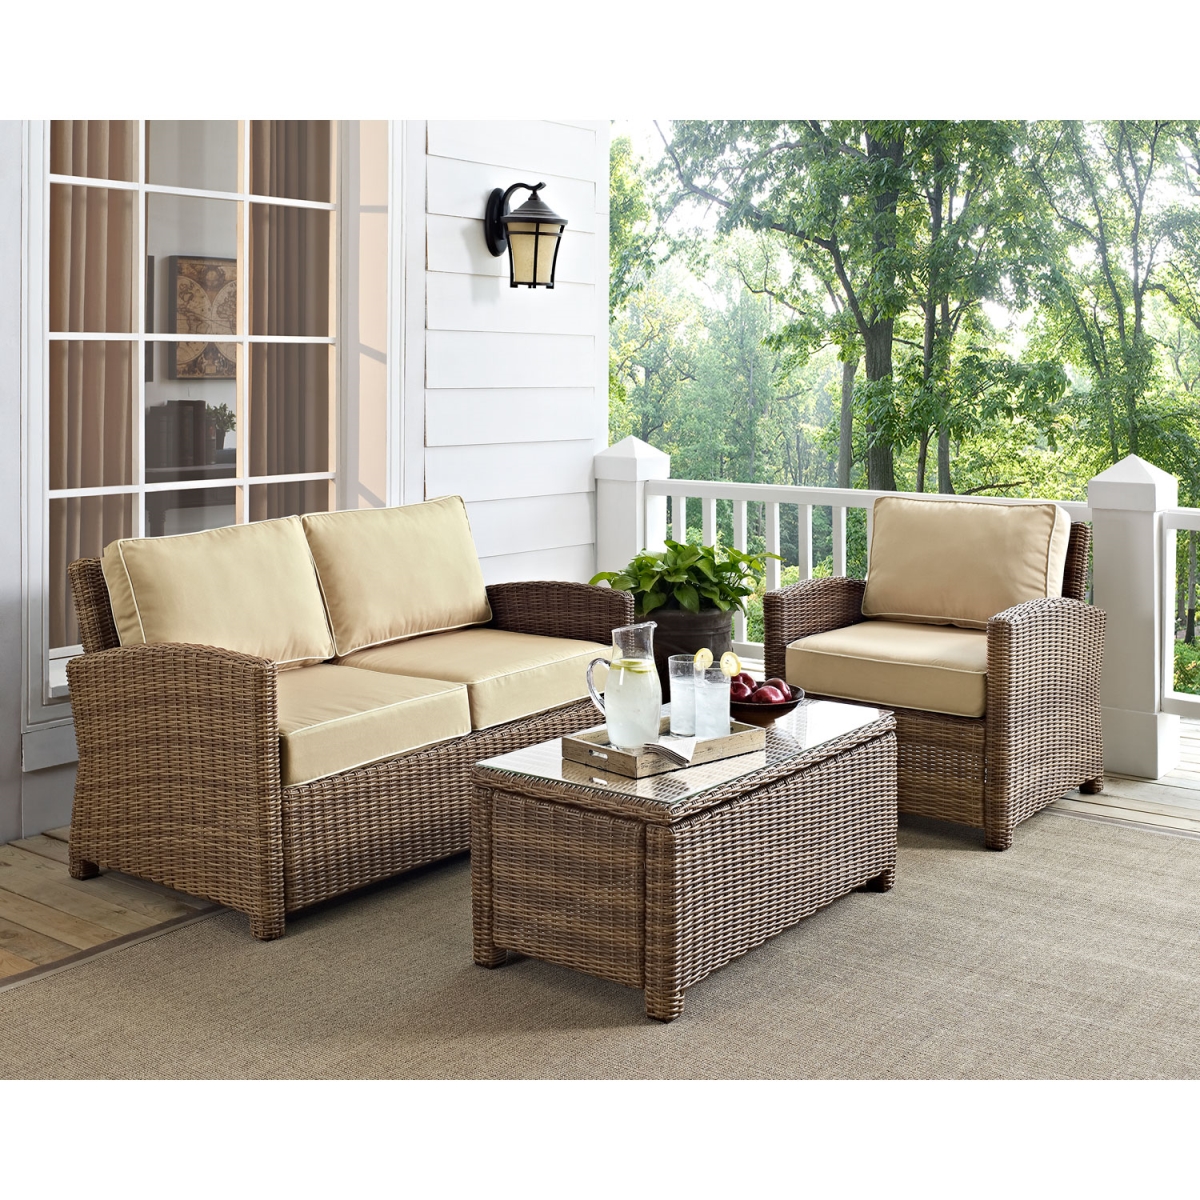 Ko70164-sa 3 Piece Bradenton Outdoor Loveseat Wicker Seating Set With Sand Cushions - Weathered Brown